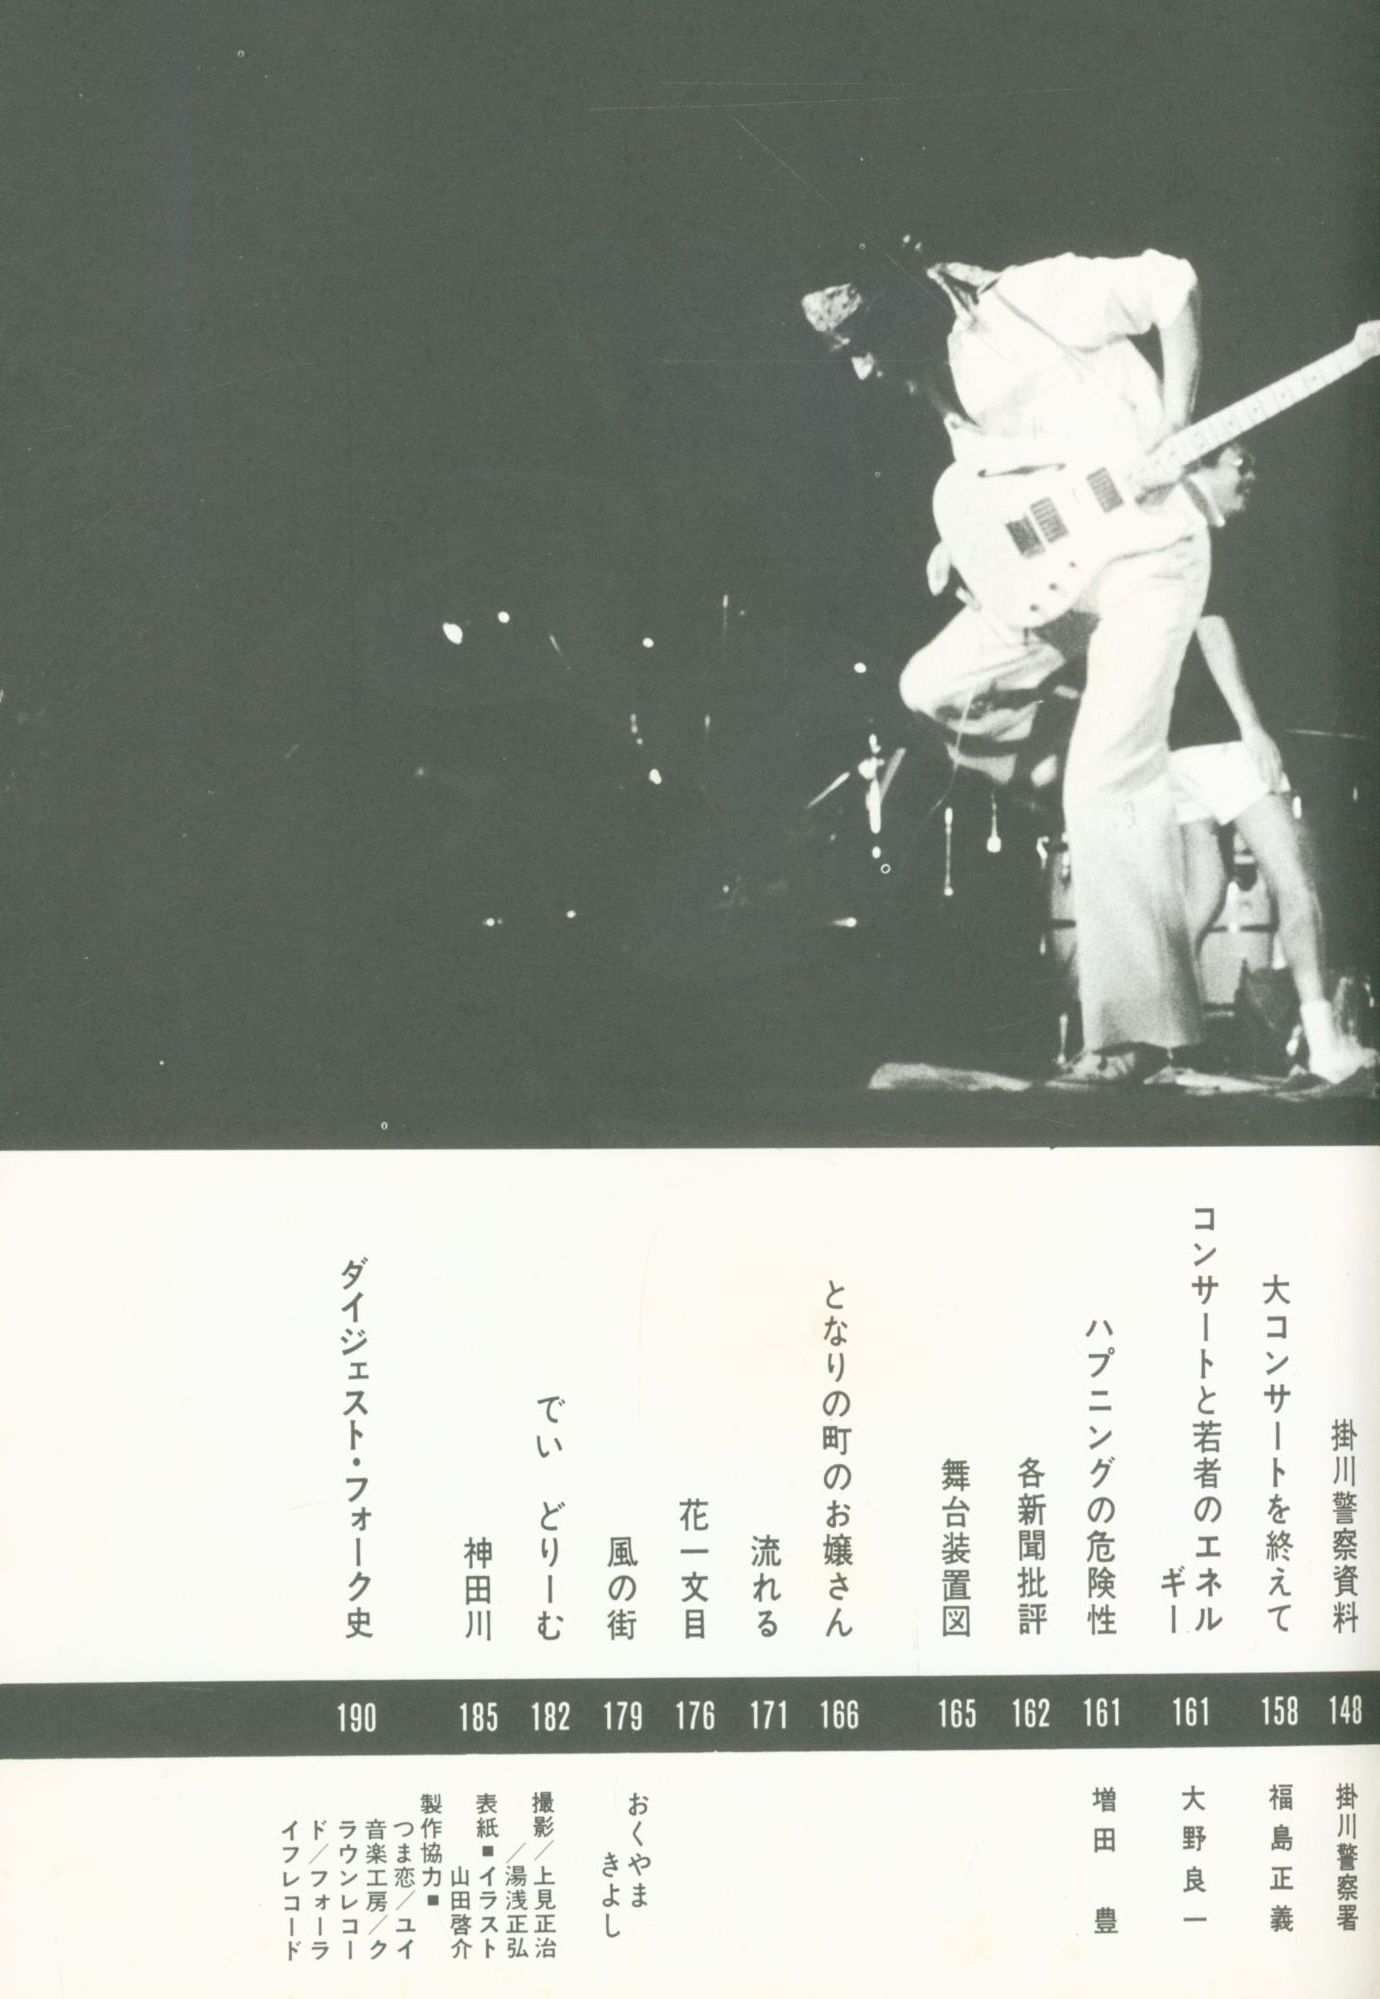 Document Tsumagoi Takuro From Kaguya 60 000 Concert Mandarake Online Shop